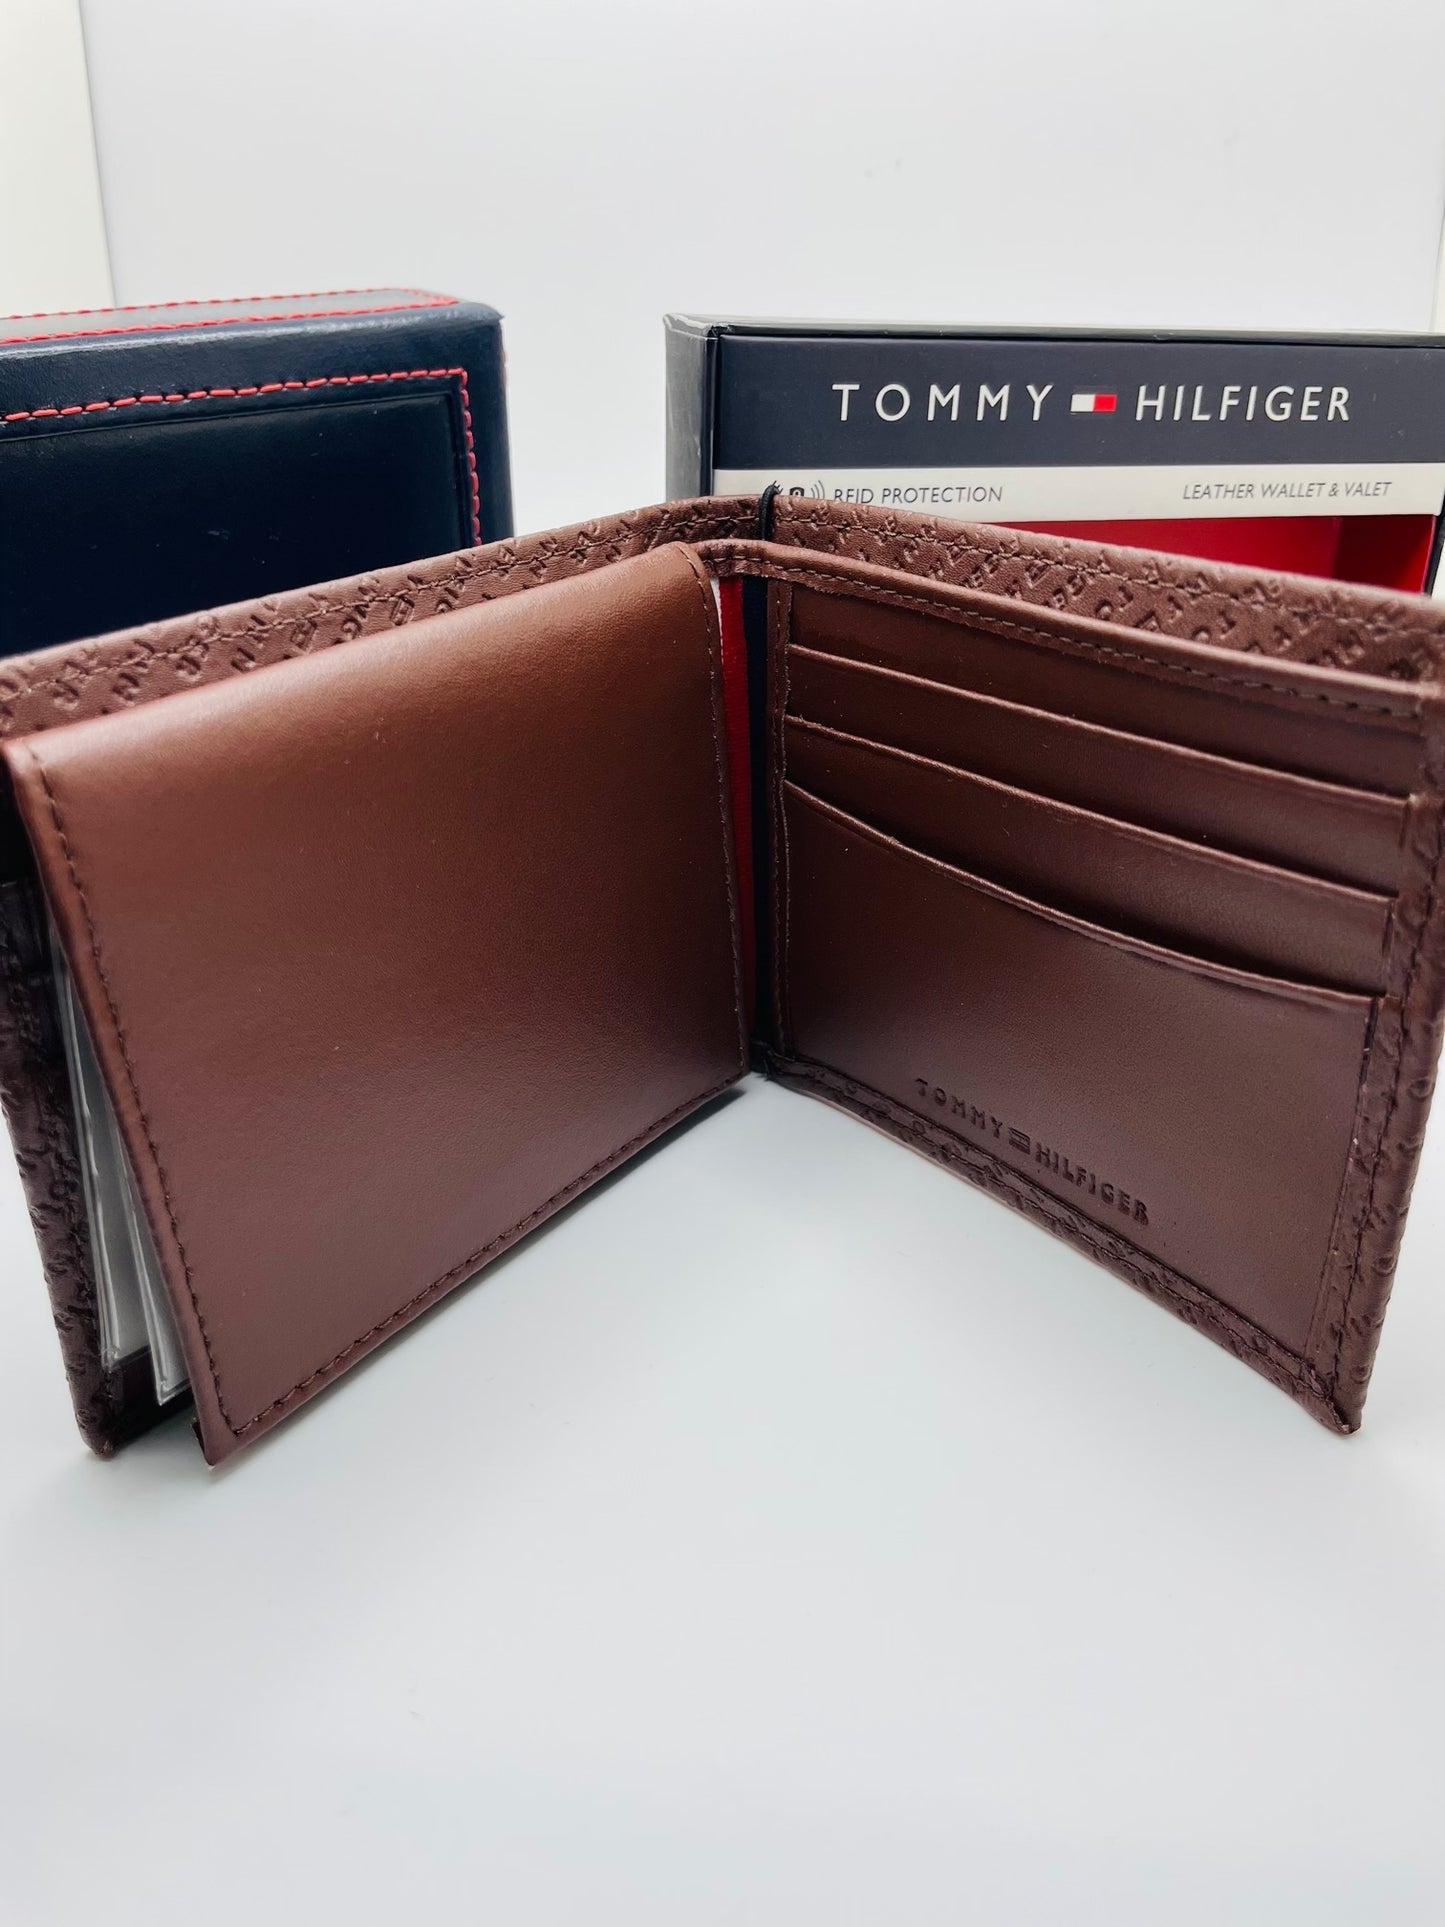 Tommy Hilfiger wallet